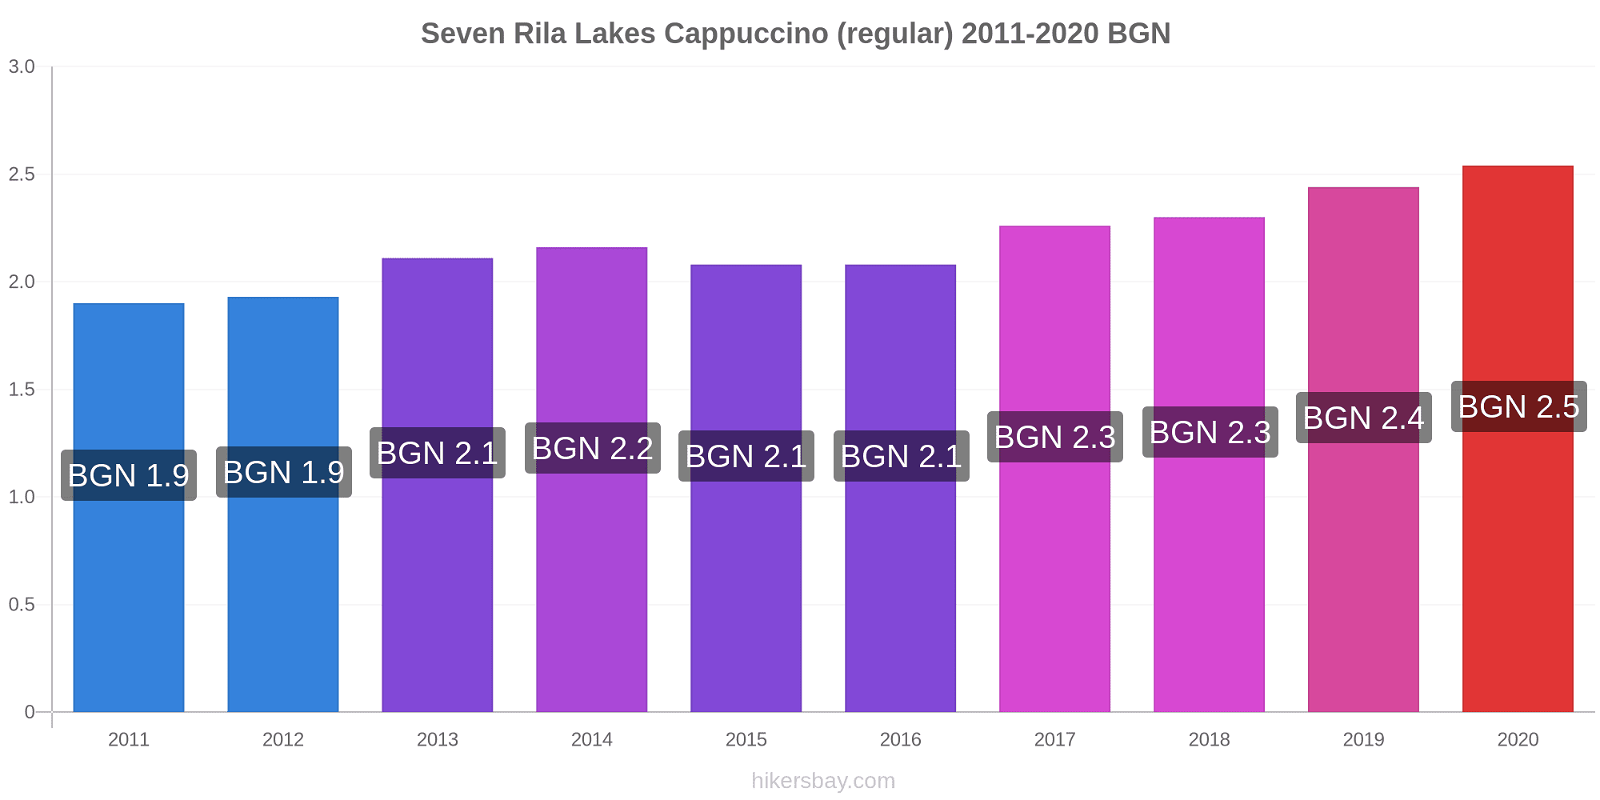 Seven Rila Lakes price changes Cappuccino (regular) hikersbay.com